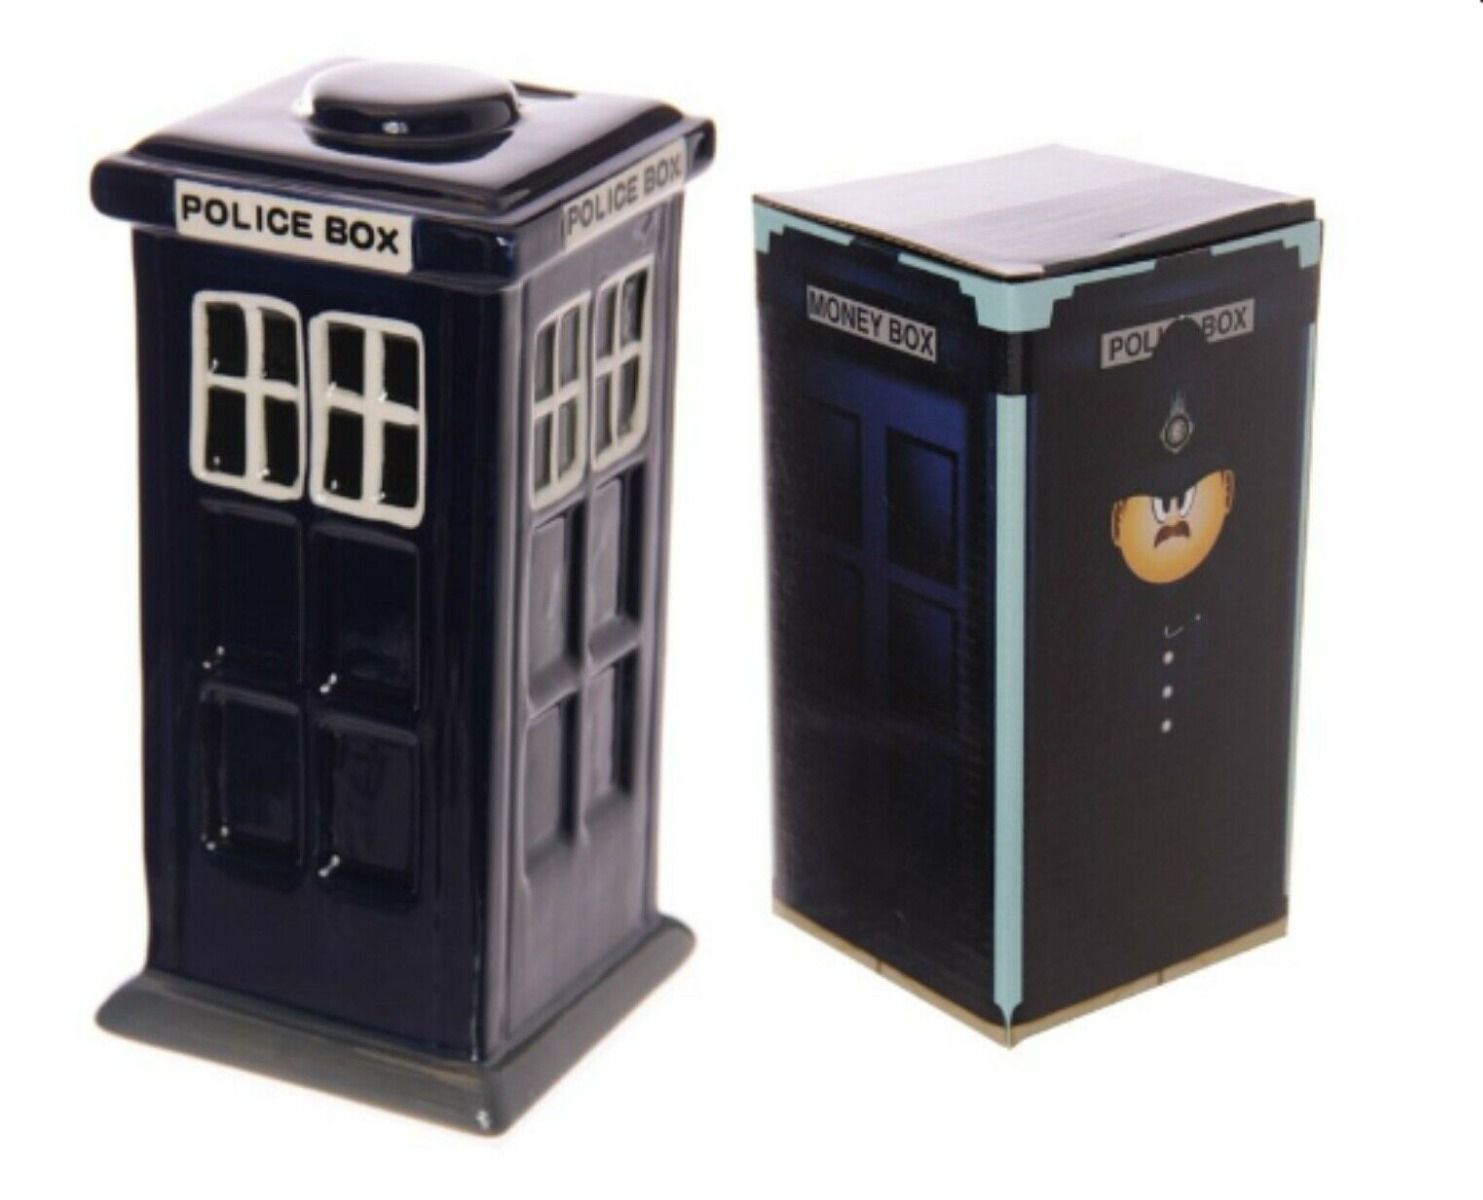 Police Box Ceramic Money Box Dr Who Tardis style by Puckator LON04